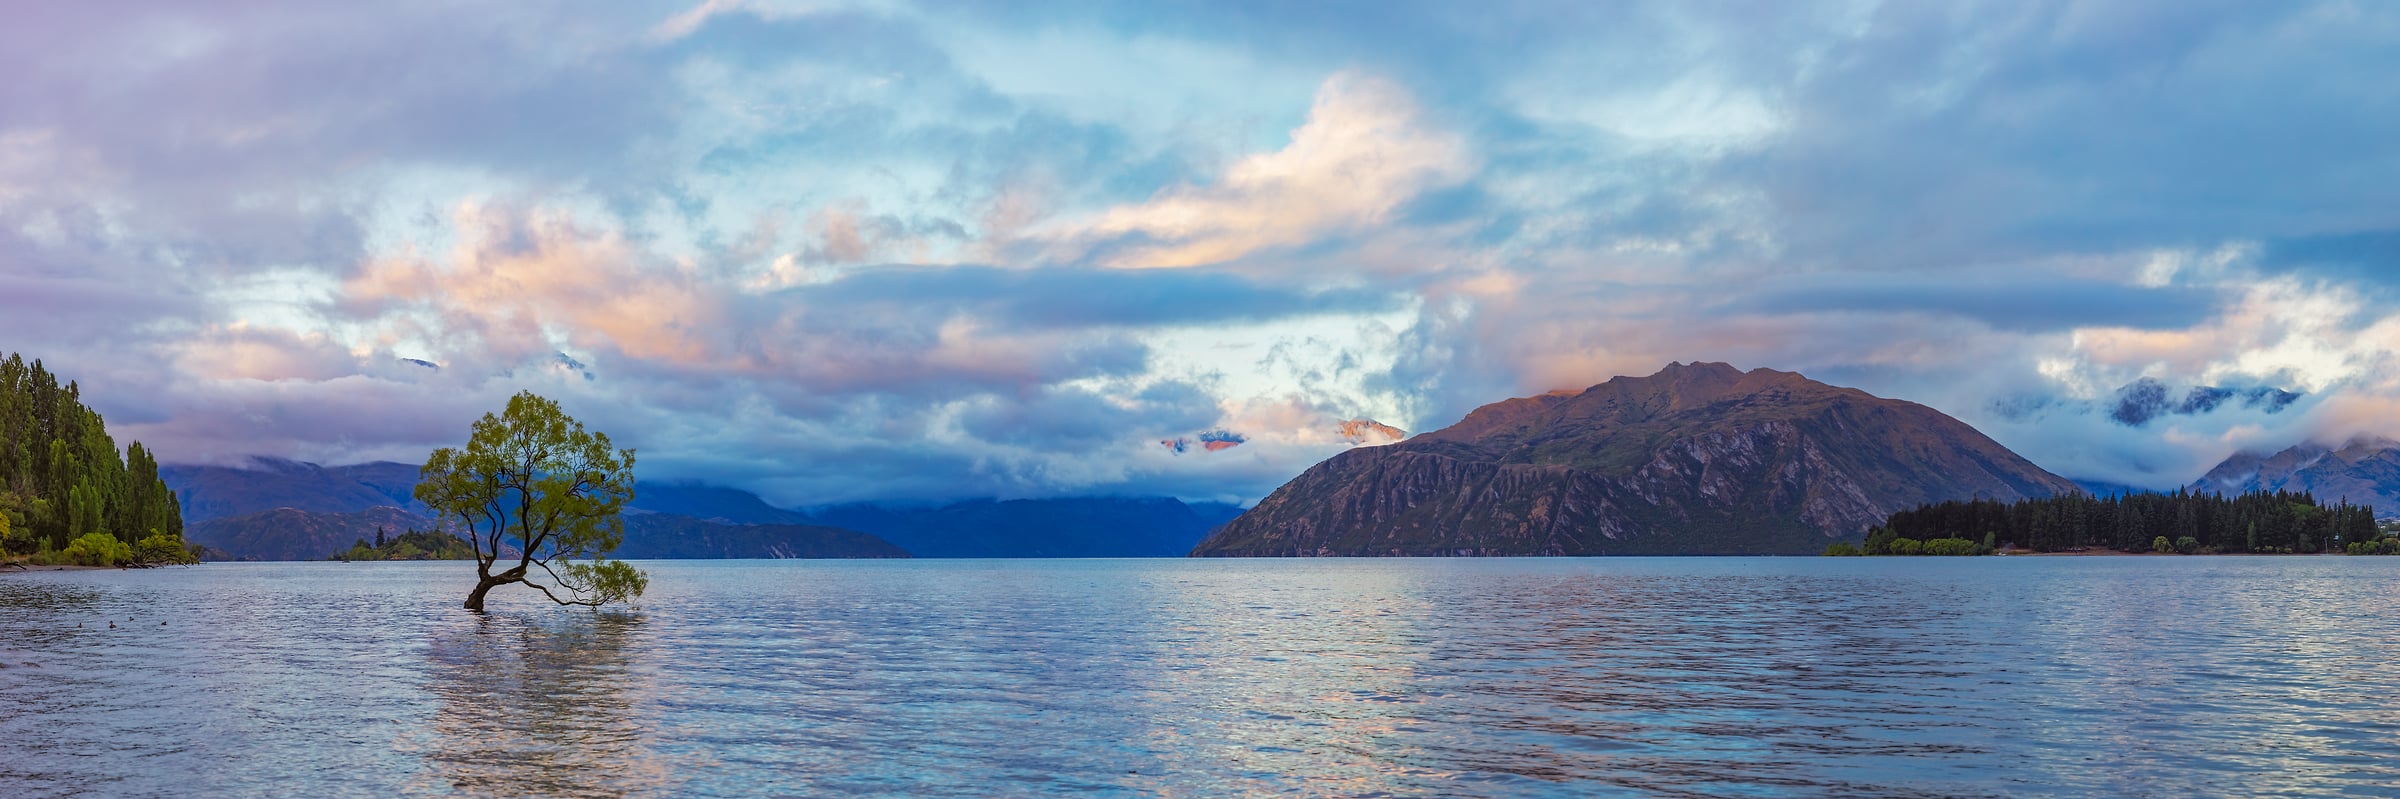 736 megapixels! A very high resolution, large-format VAST photo print of a beautiful lake with a tree; panorama photograph created by John Freeman in Wanaka Lake, Wanaka, New Zealand